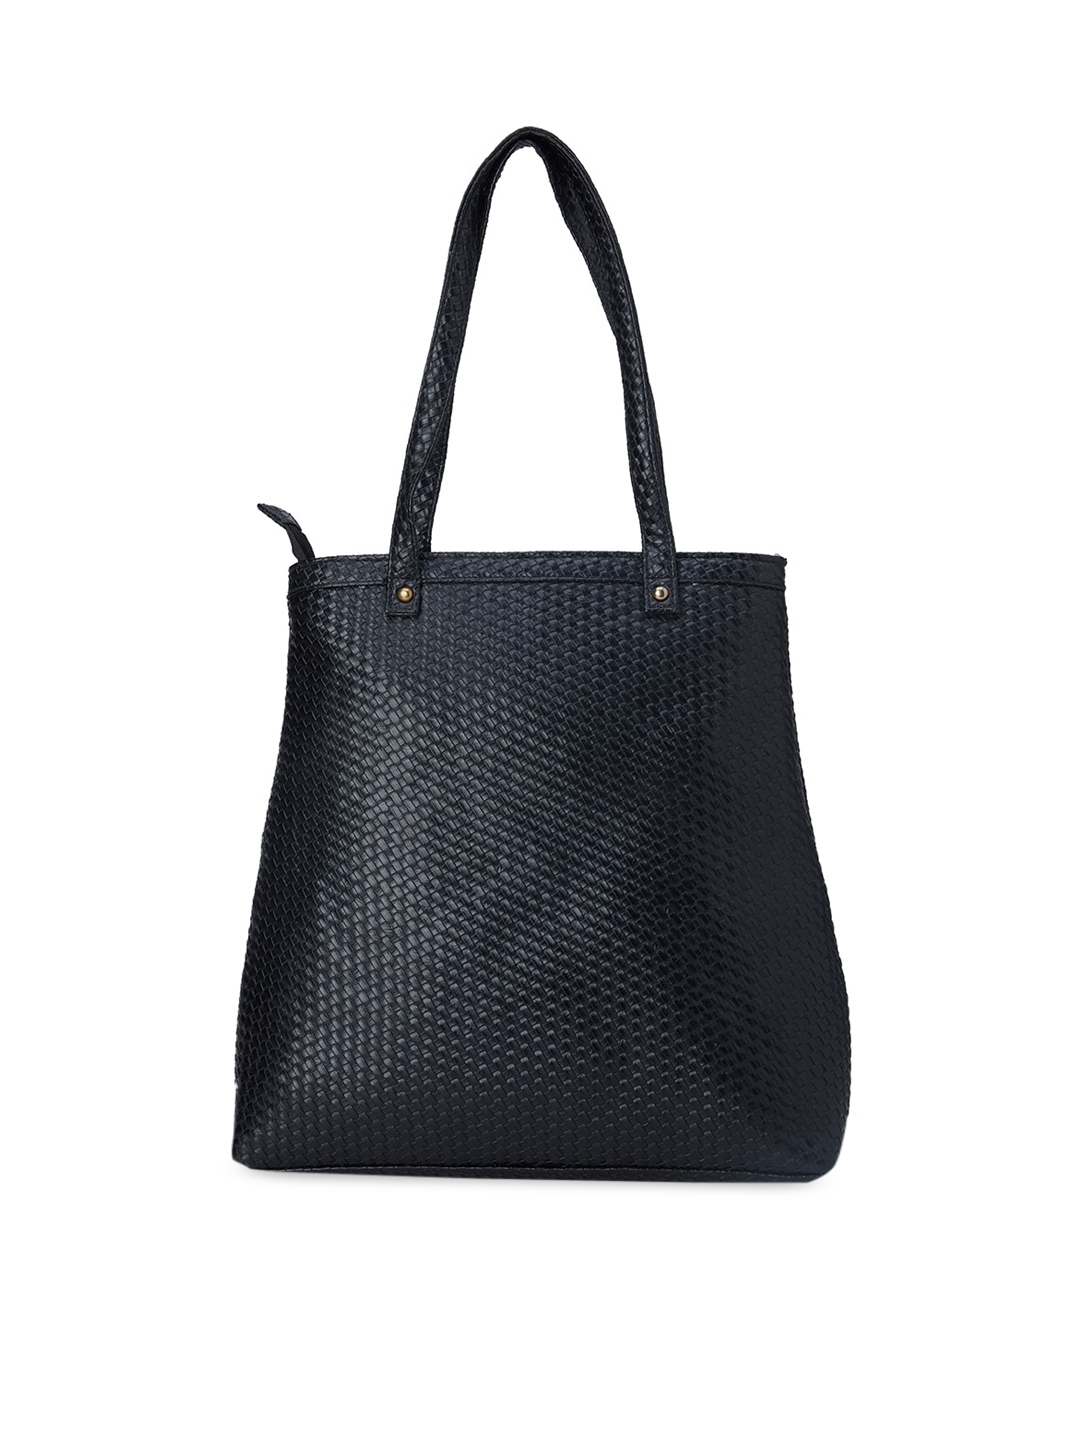 Buy Tarusa Black Solid Shoulder Bag - Handbags for Women 12732268 | Myntra